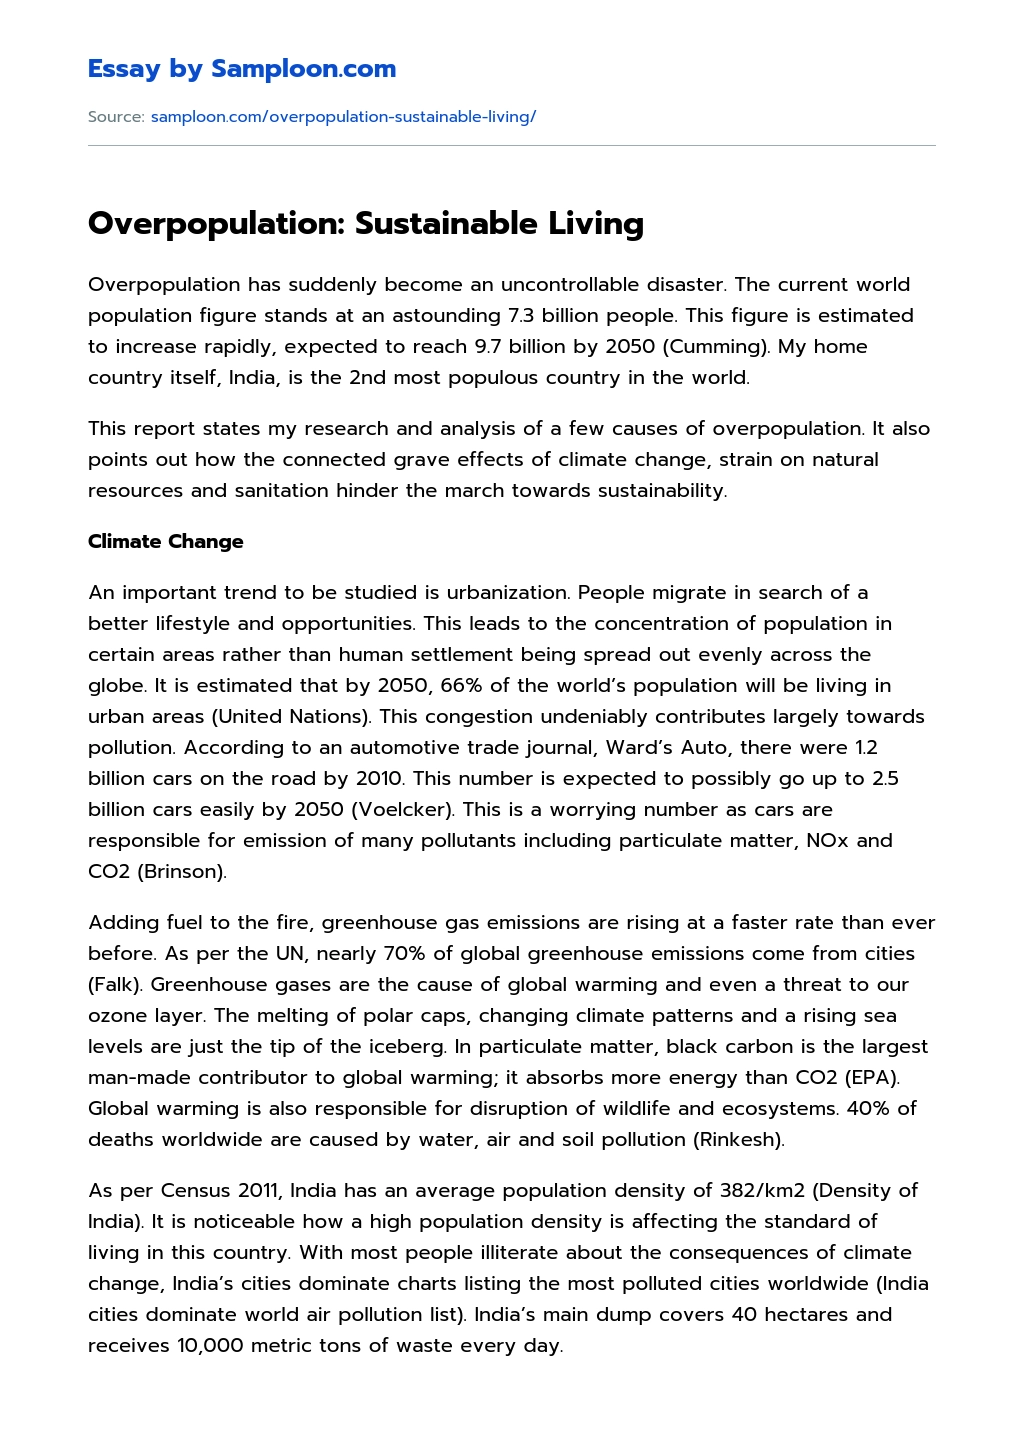 Overpopulation: Sustainable Living essay